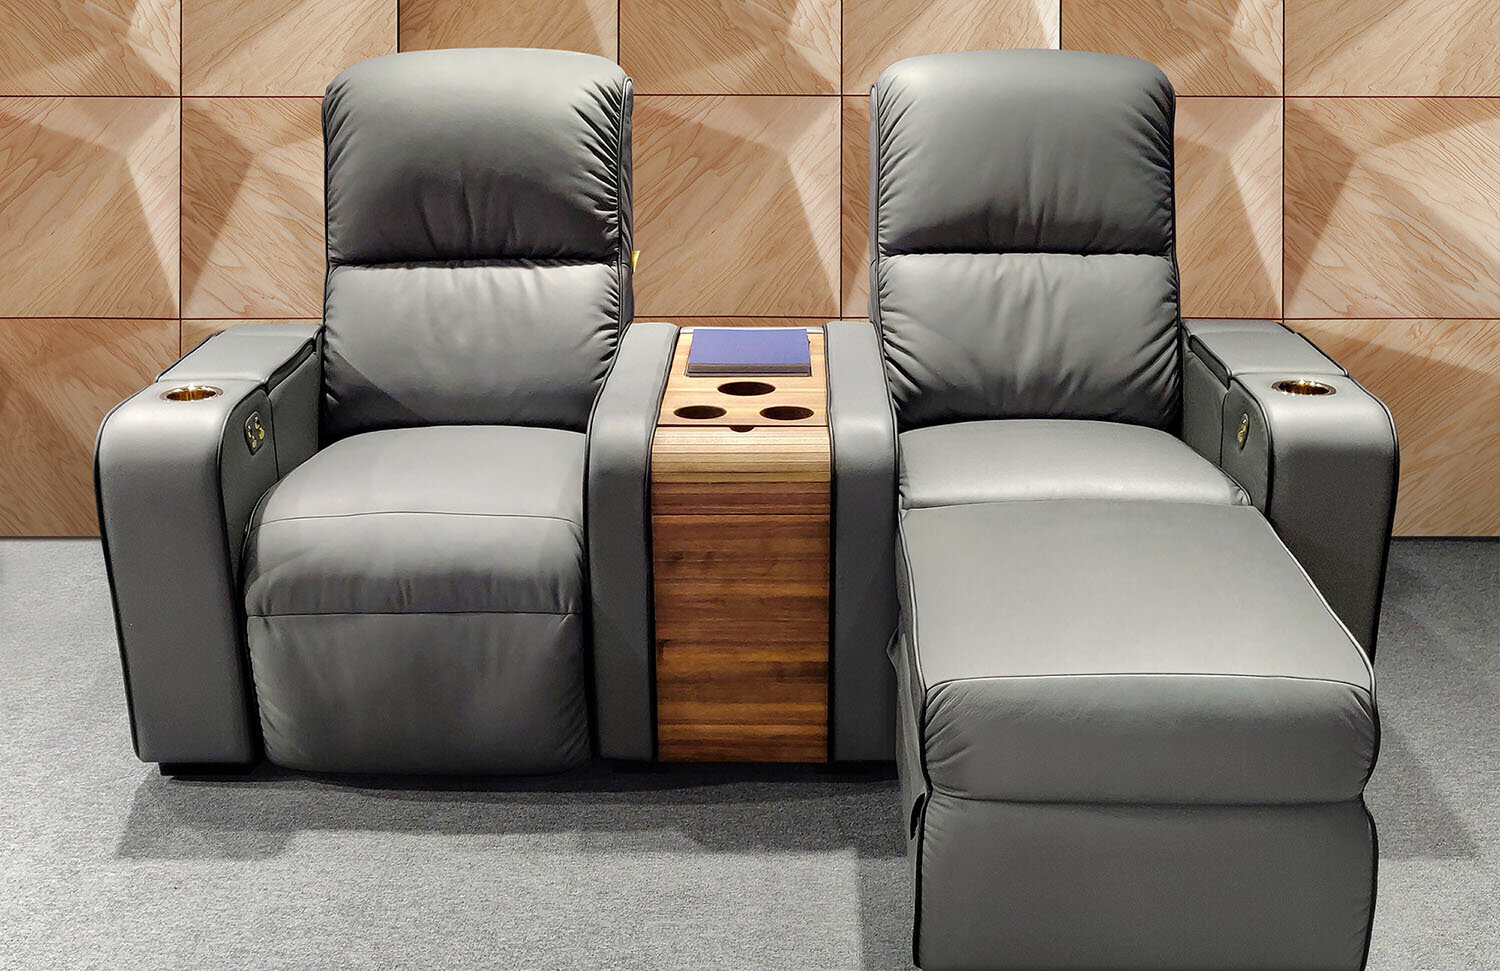 Storage Compartments, Cupholders - Home Cinema Seats - moovia®